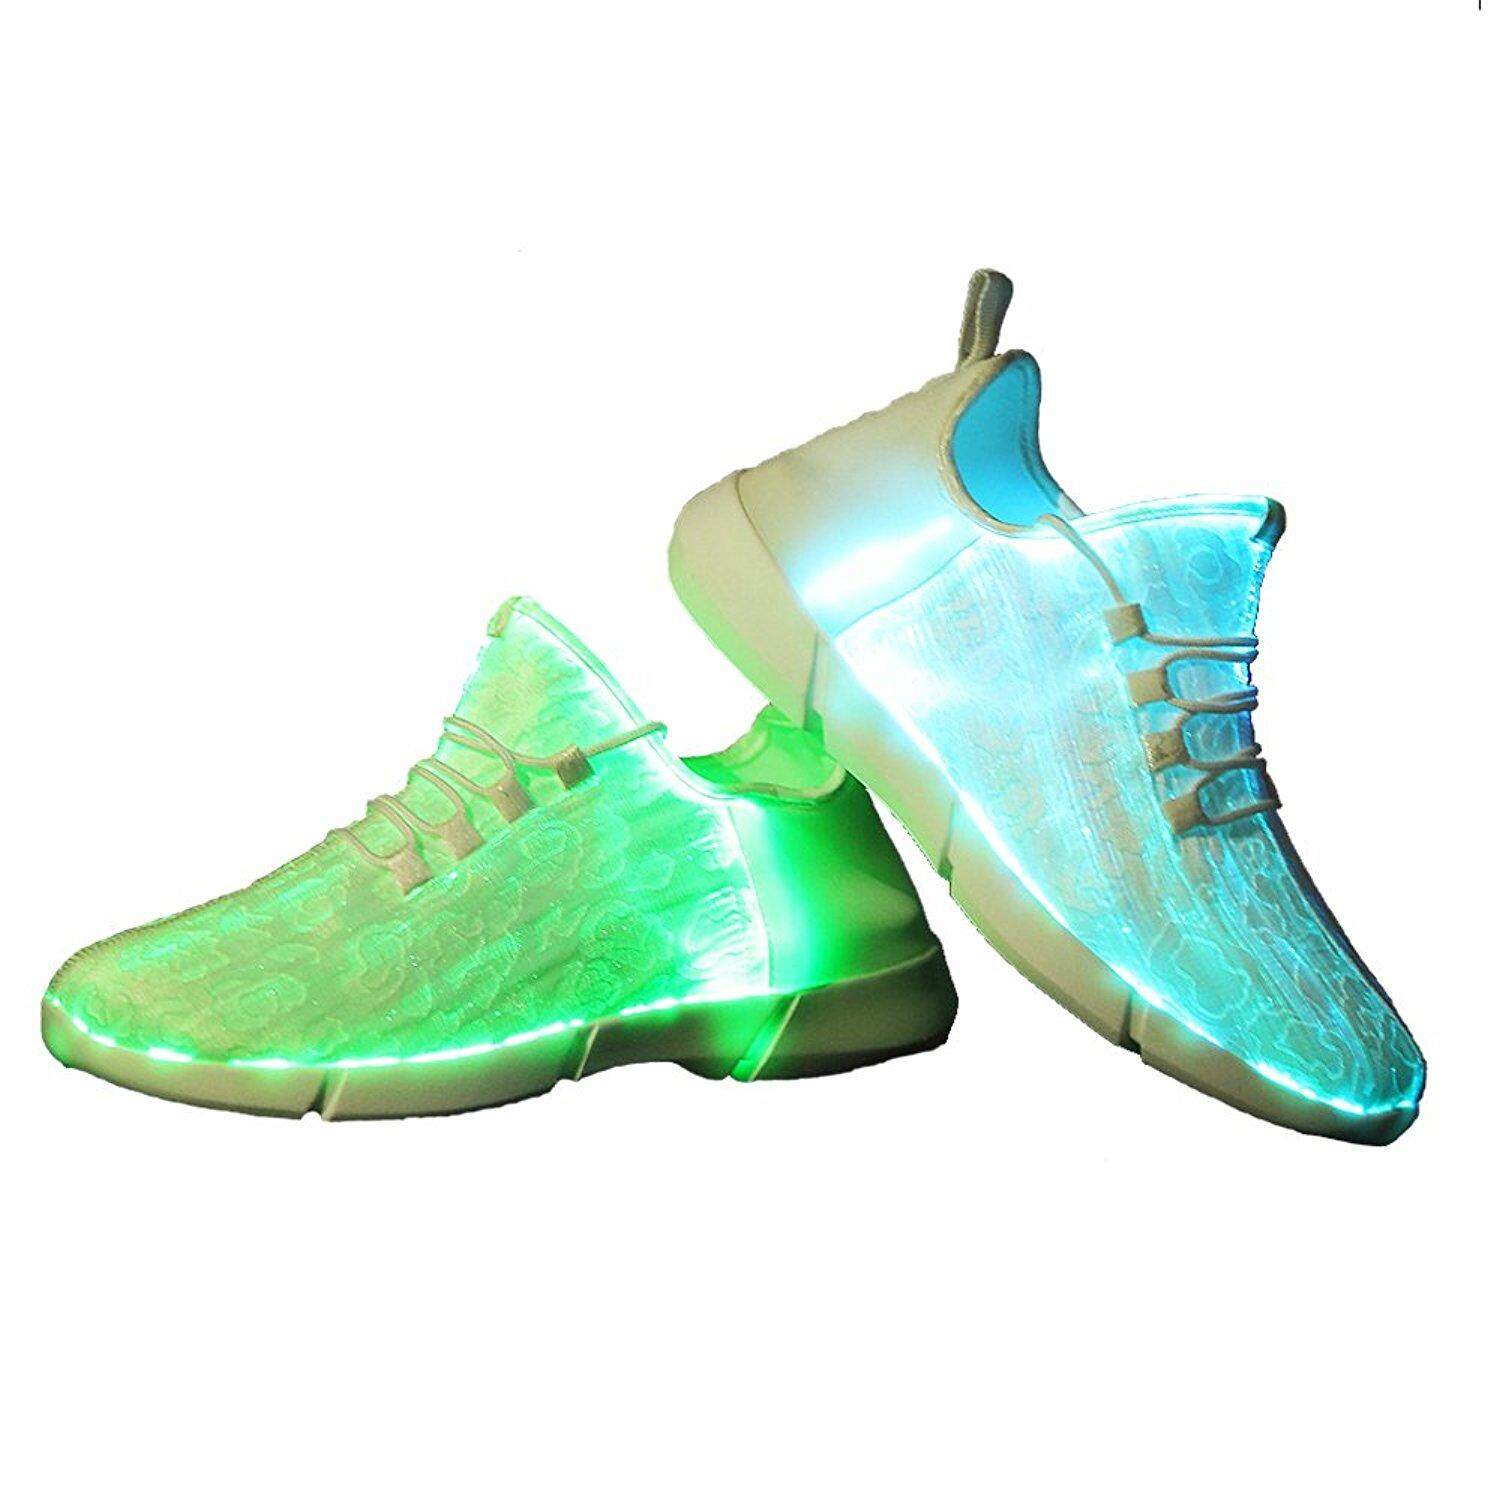 fiber optic light up shoes